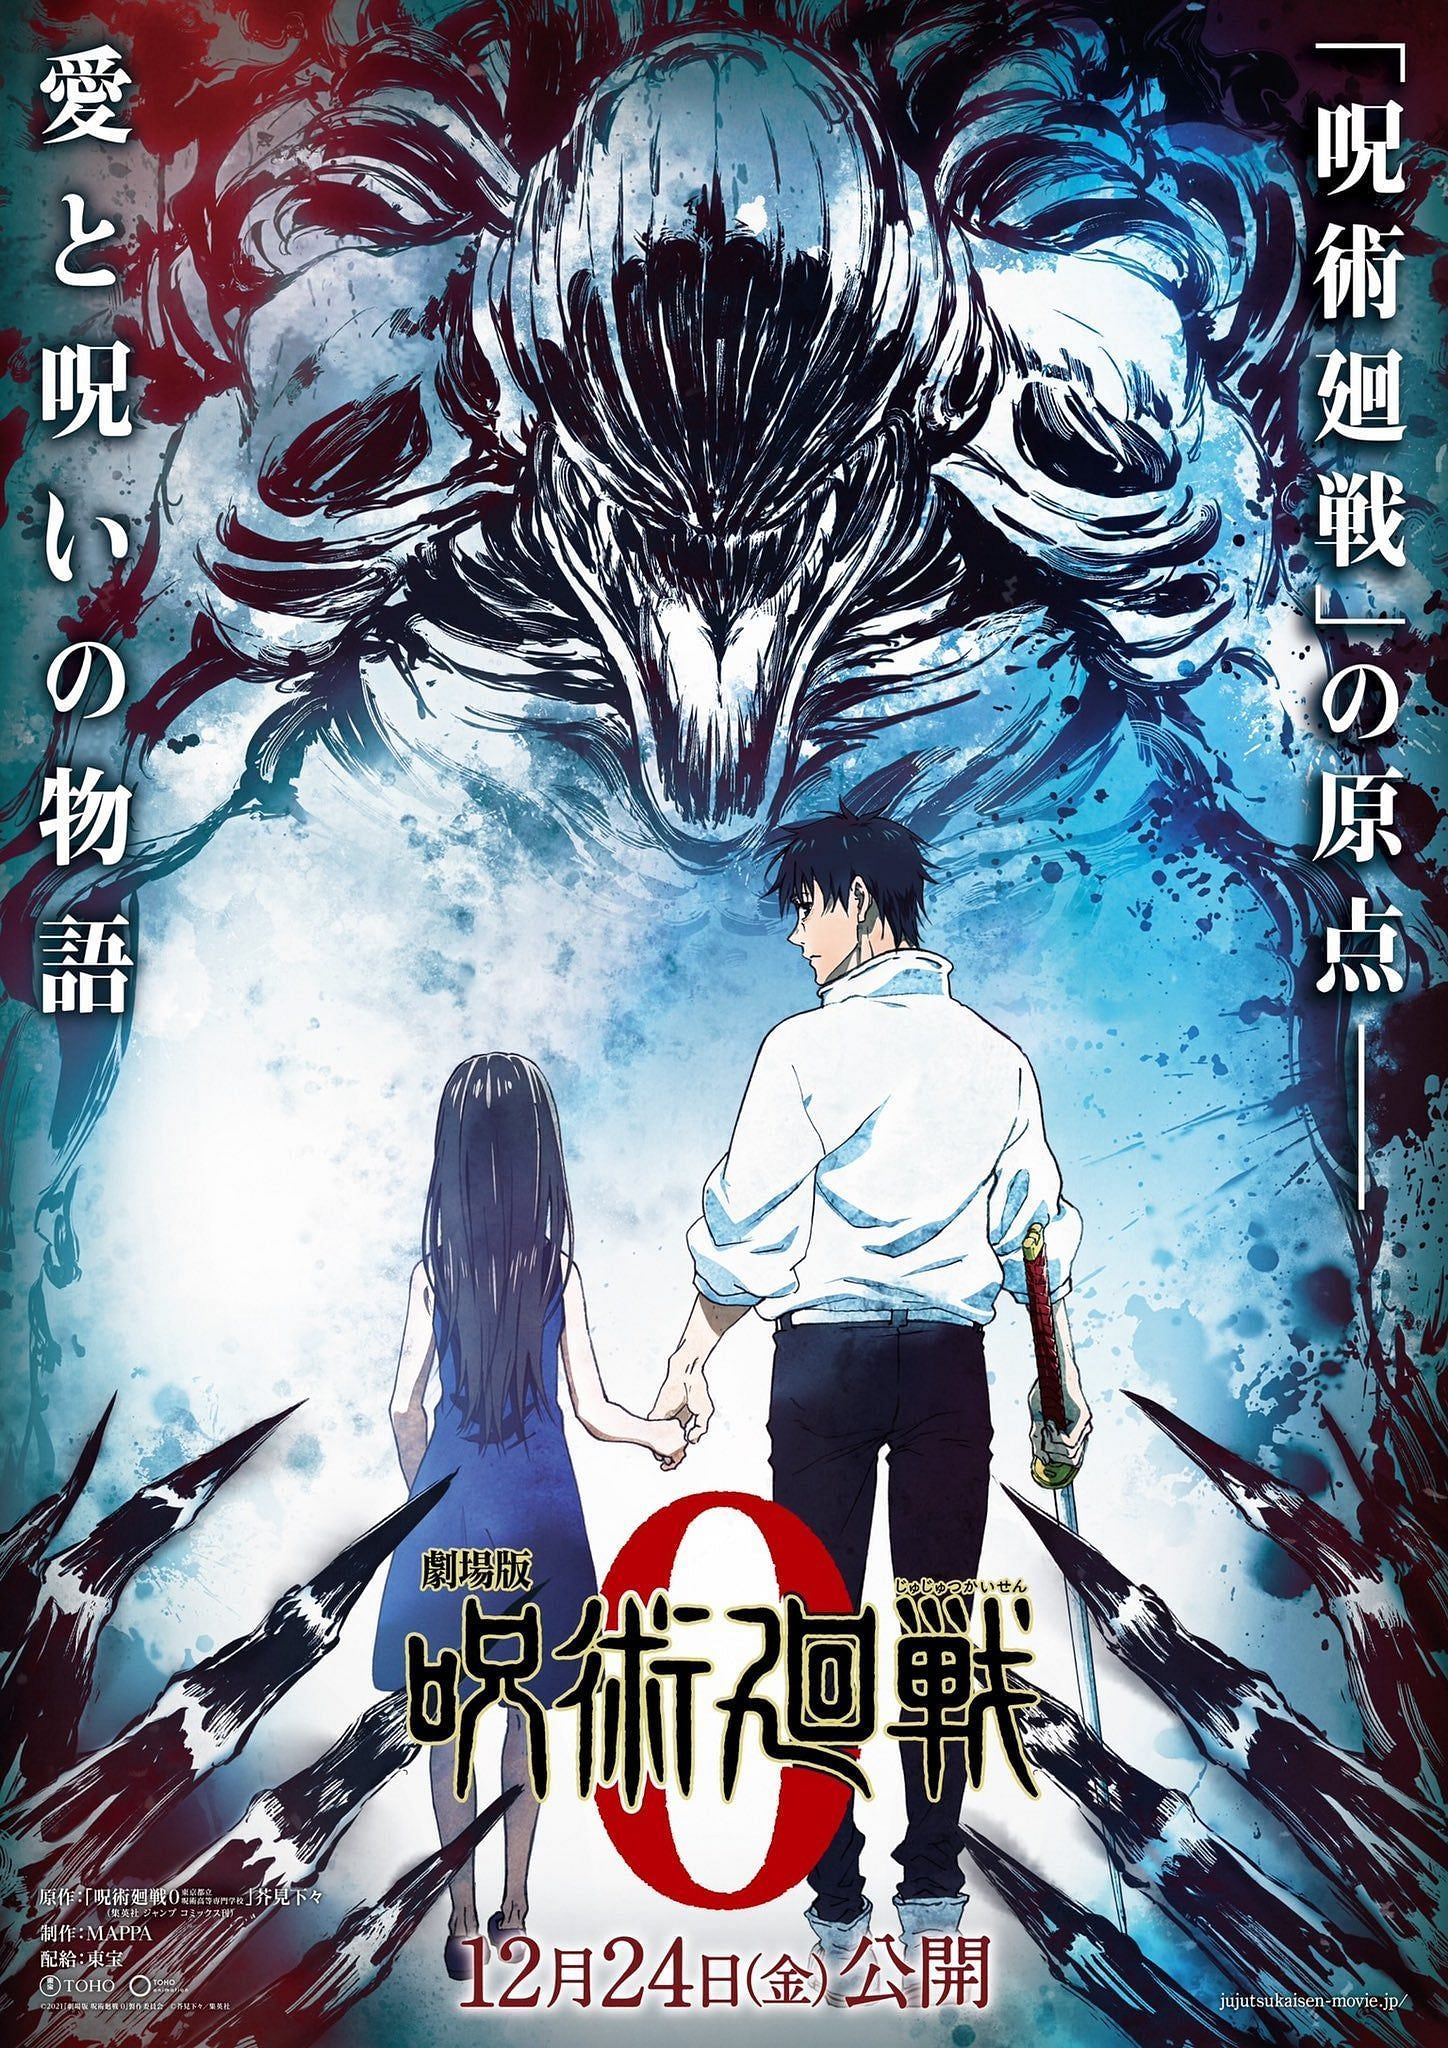 The poster for the Jujutsu Kaisen 0 movie. (Image via Shueisha)